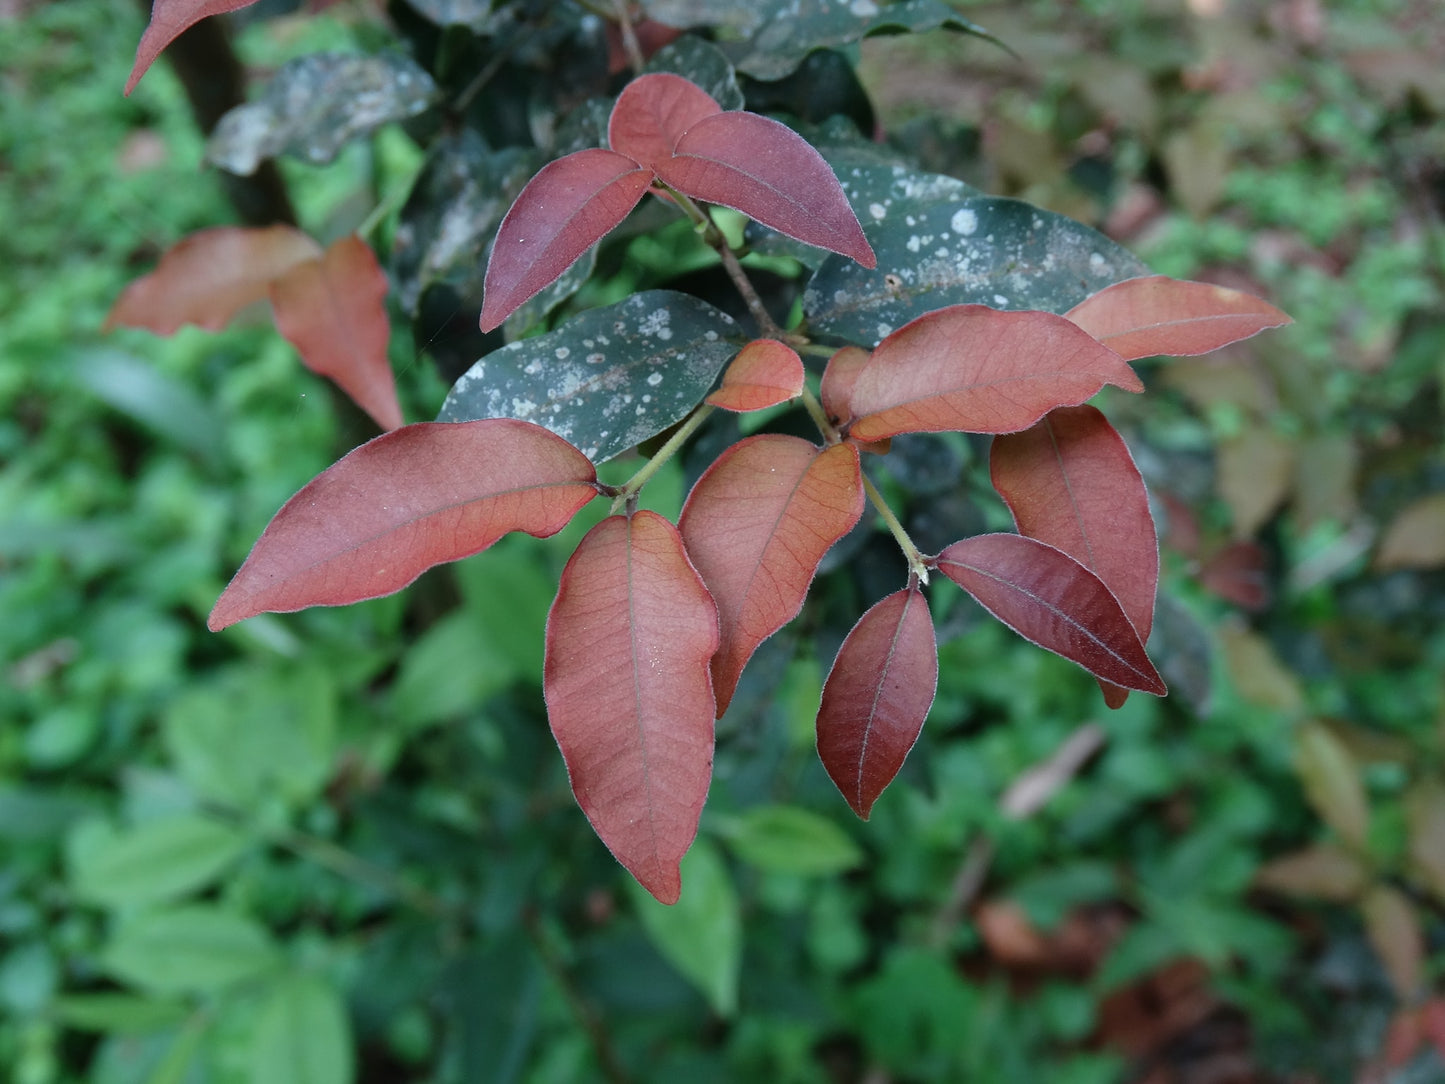 Araca Piranga Fruit Plant (Eugenia sp leitonii)